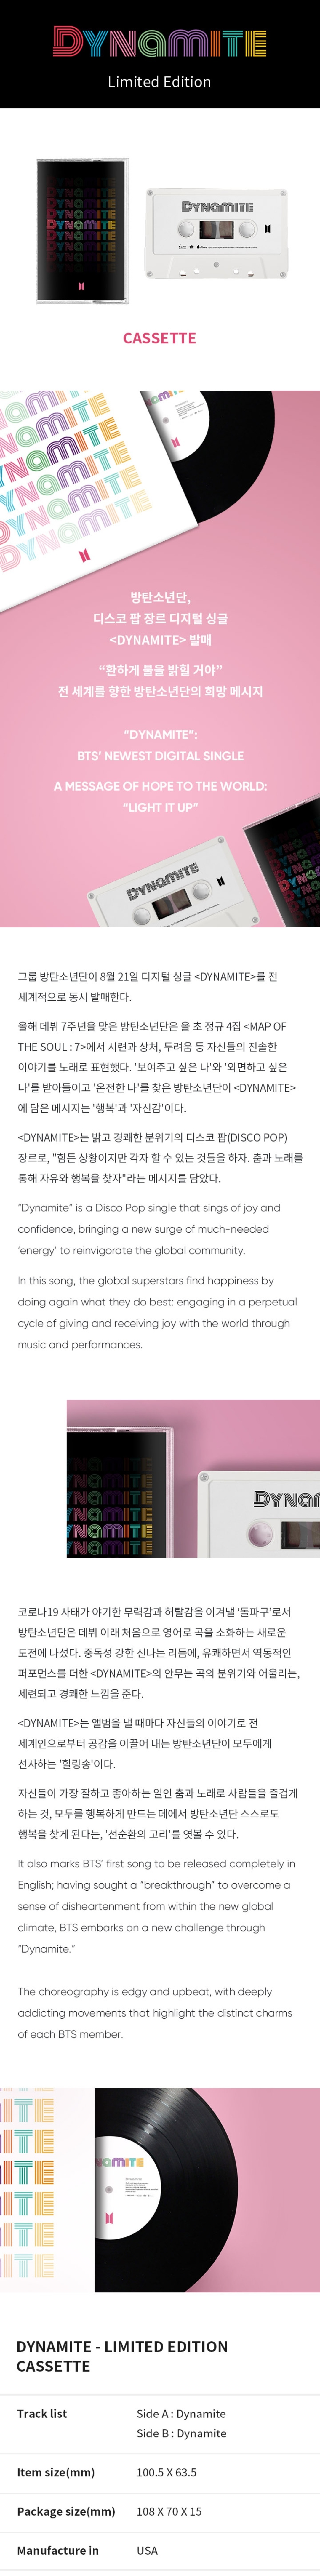 BTS Dynamite  limited edition Cassette